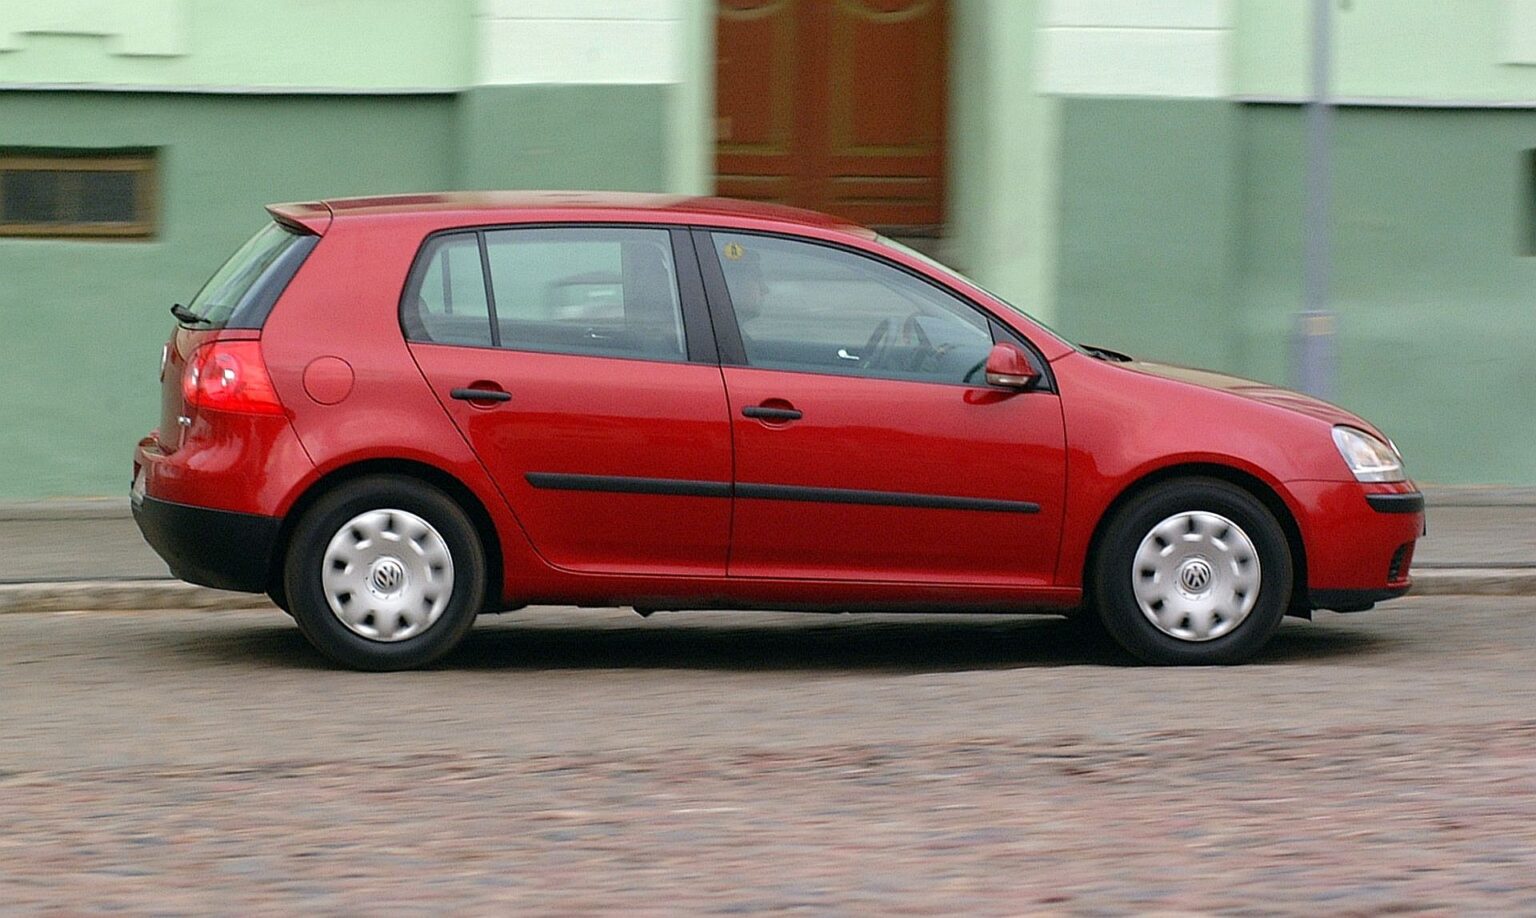 Używany Volkswagen Golf V (20032008) opinie, dane